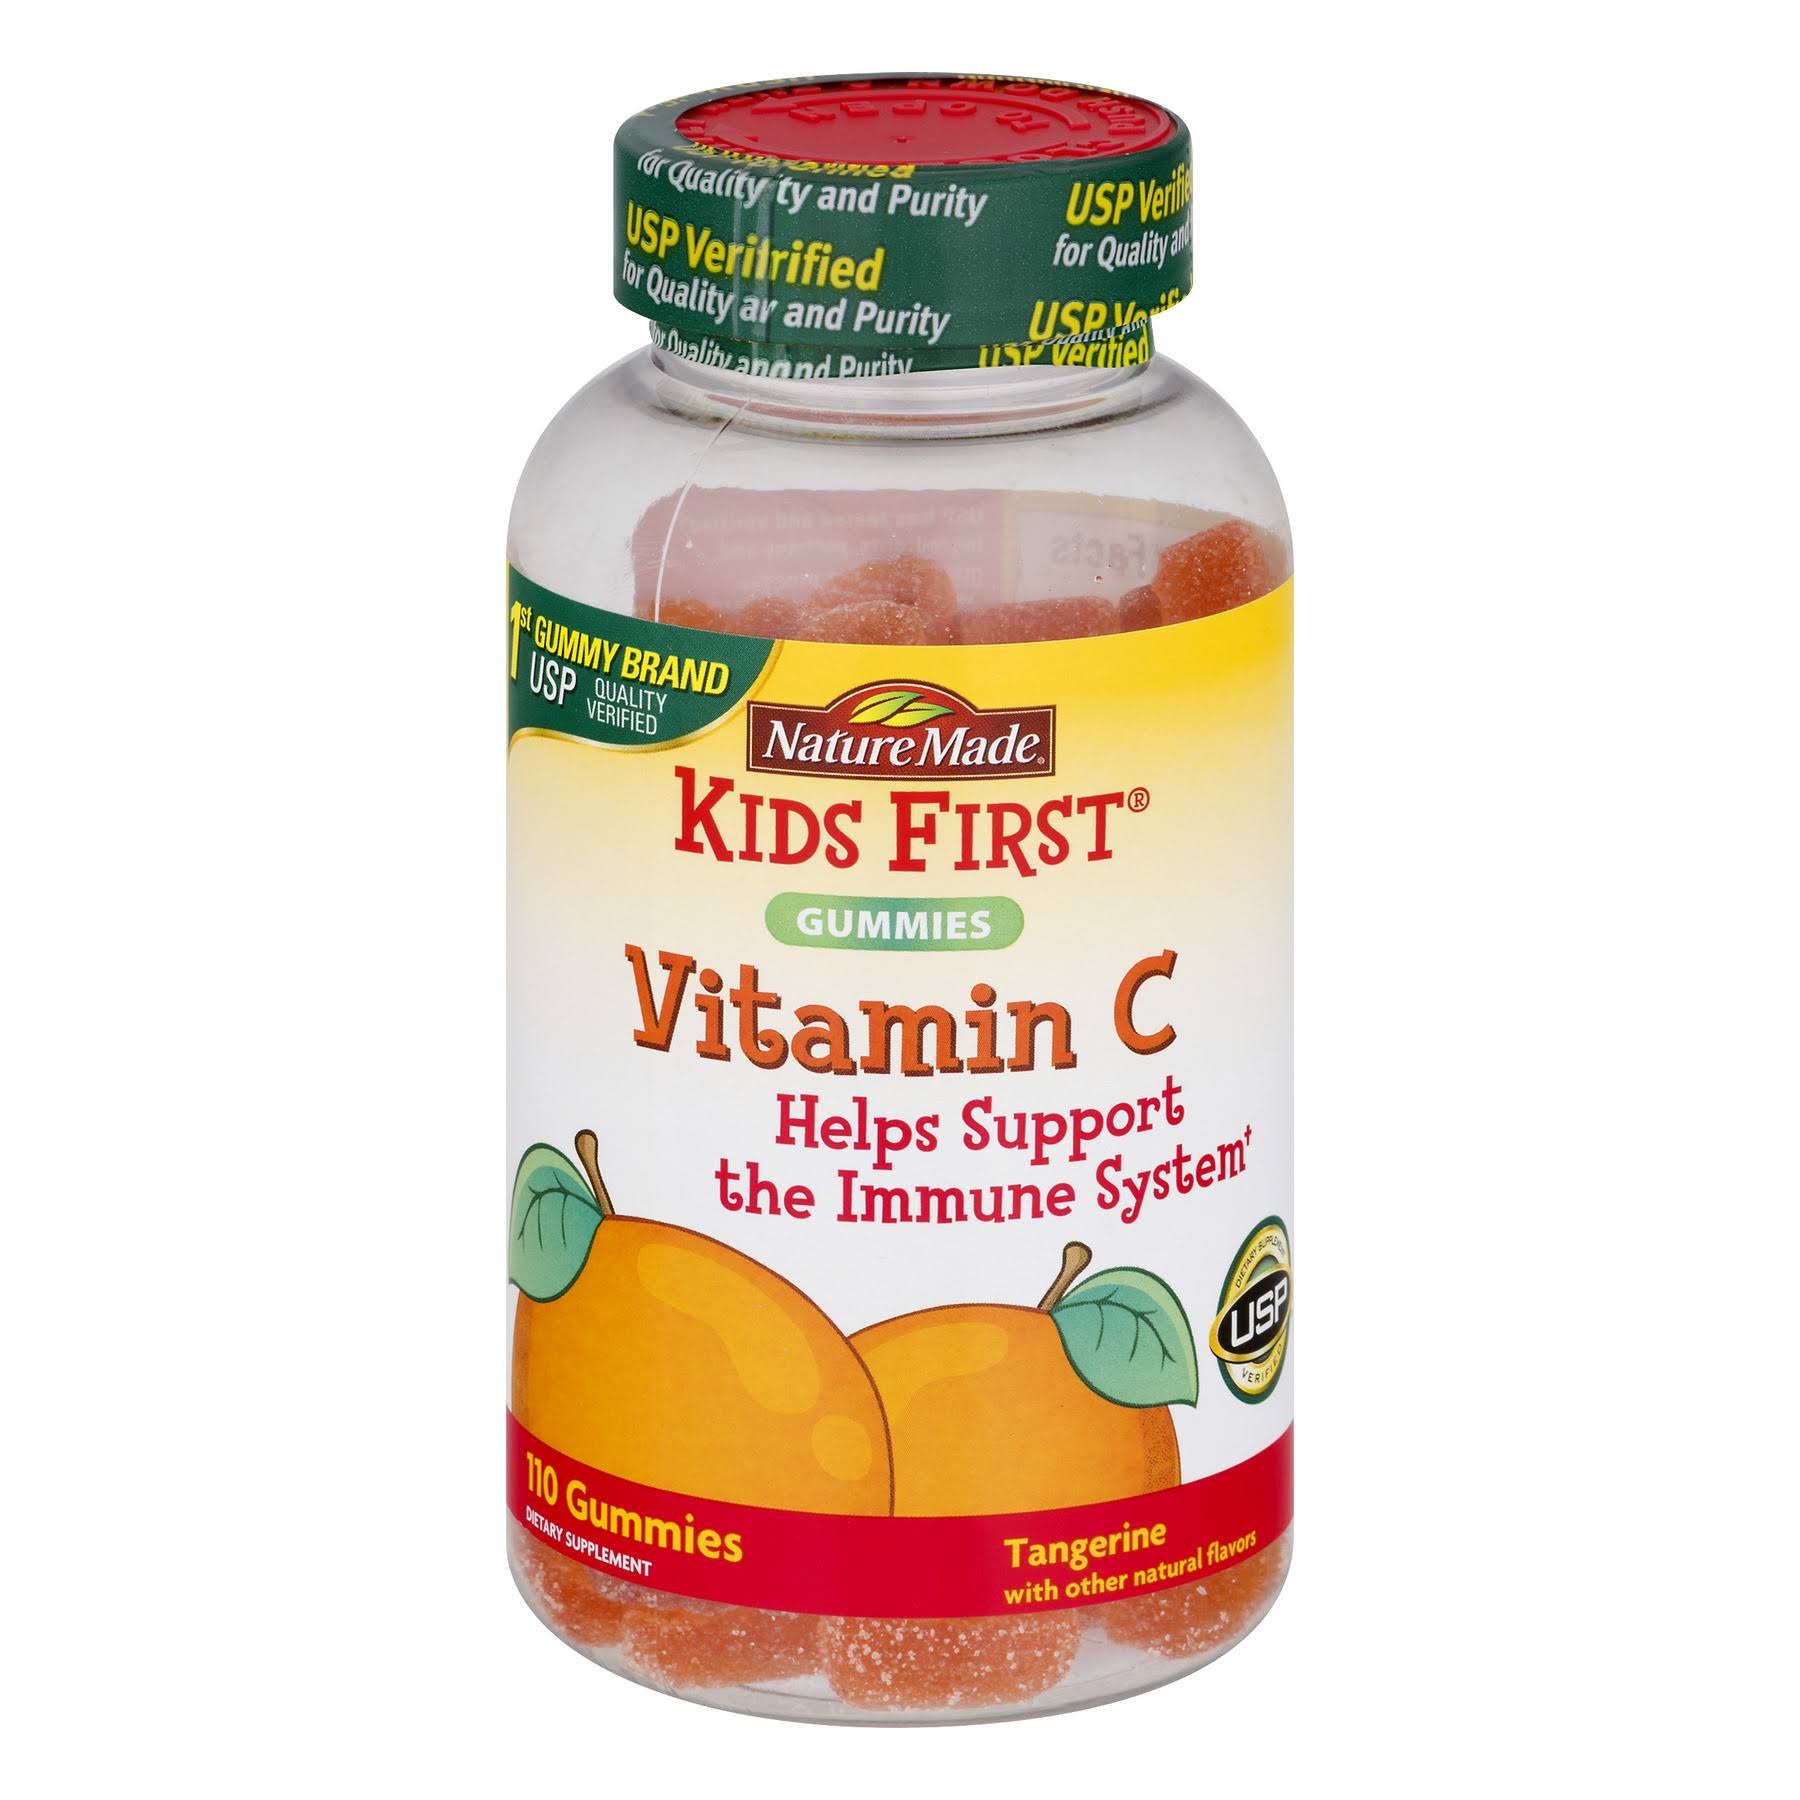 Nature Made Kids First Vitamin C Dietary Supplement Gummies - Tangerine, 110ct